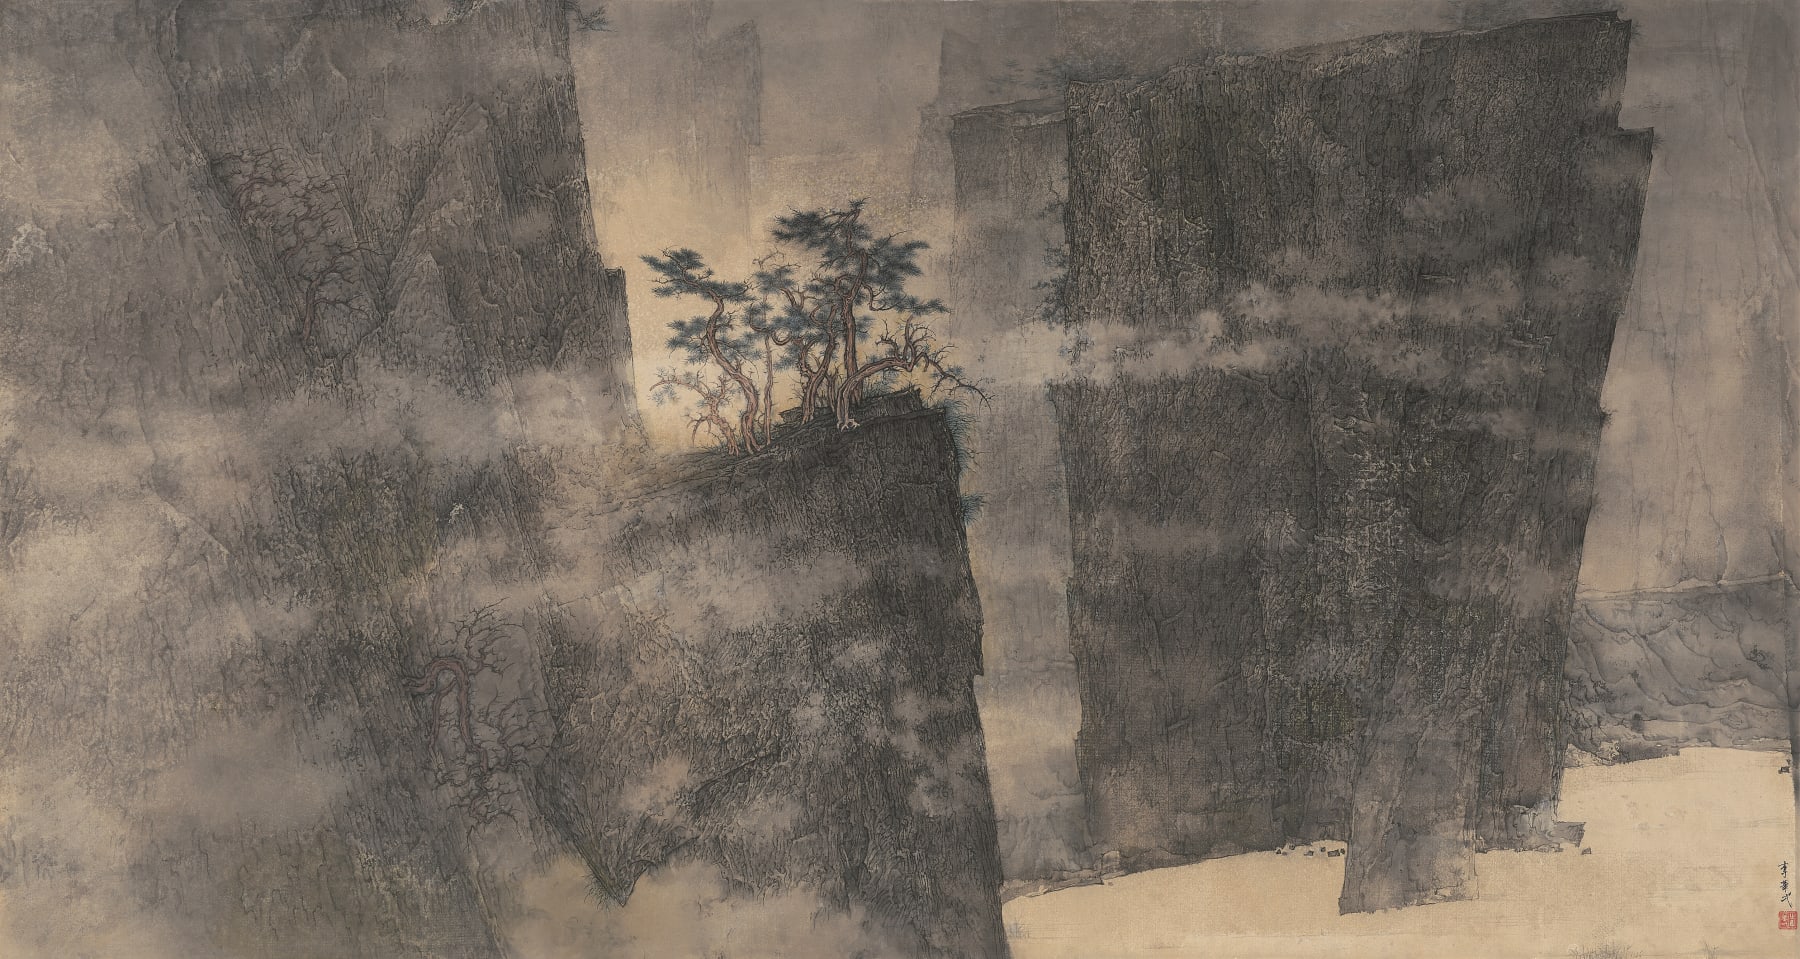 Li Huayi 李華弌, Rock Pine in the Evening Mist《暮靄岩松》, 2009